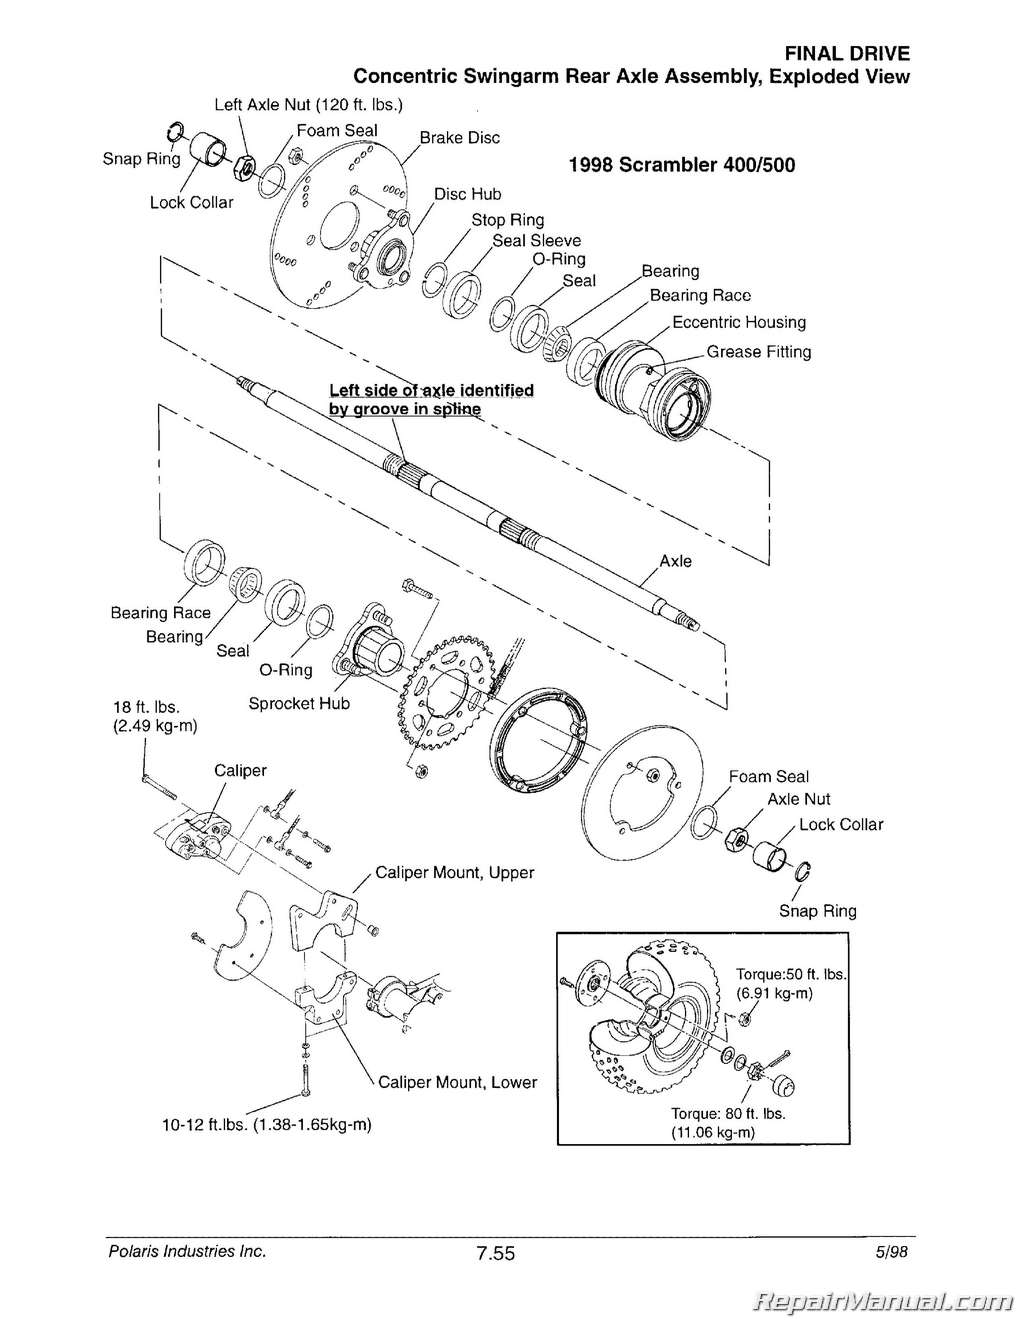 1996-1998-Polaris-ATV-and-Light-Utility-Vehicle-Repair-Manual3.jpg